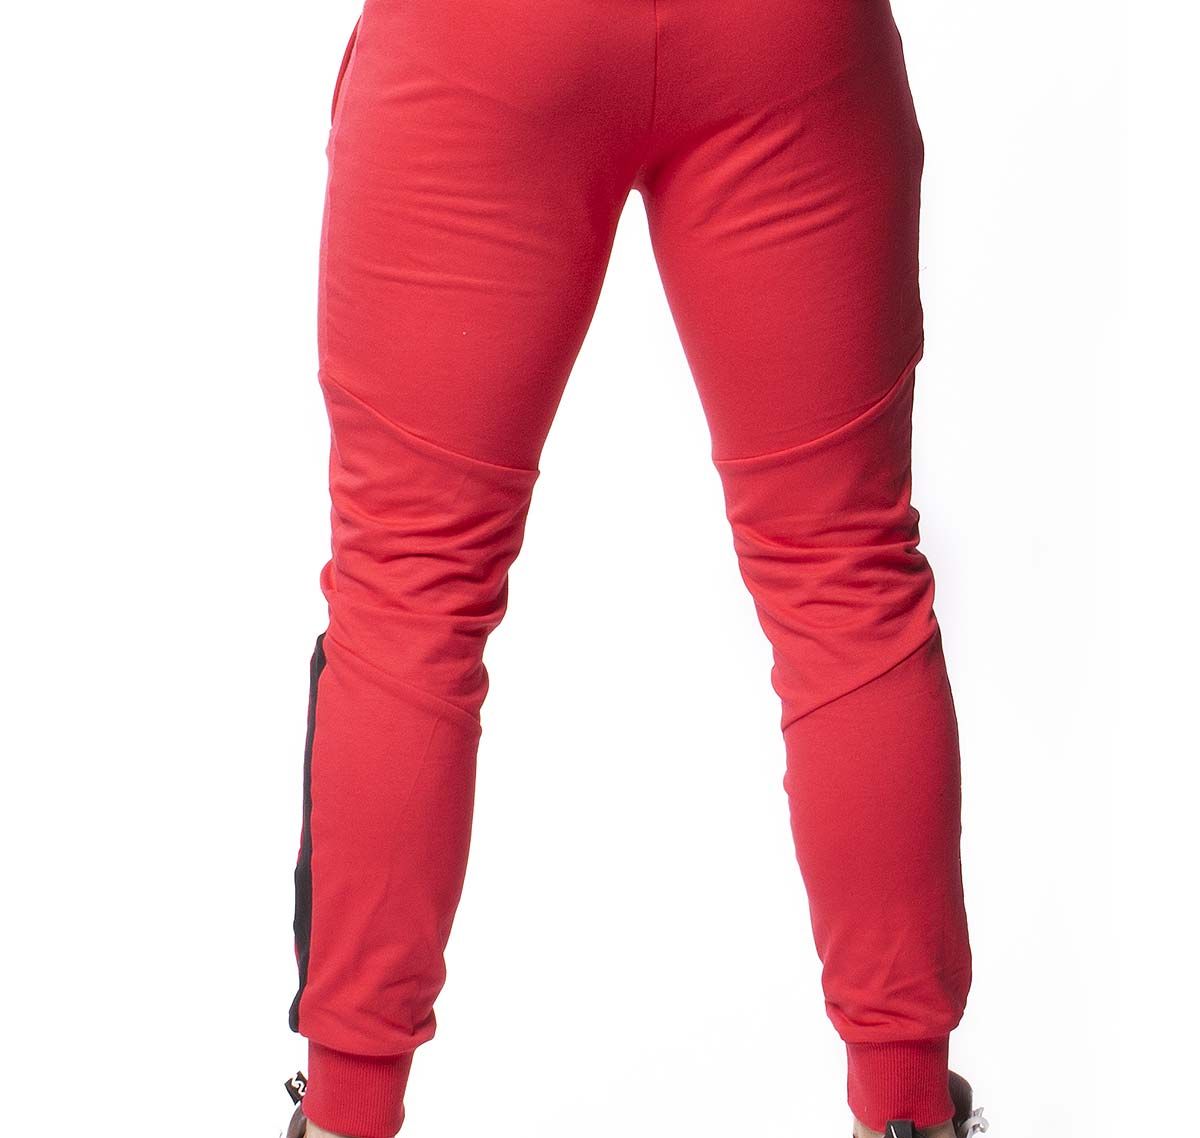 Alexander COBB Training pants PANTS RED BLACK, red